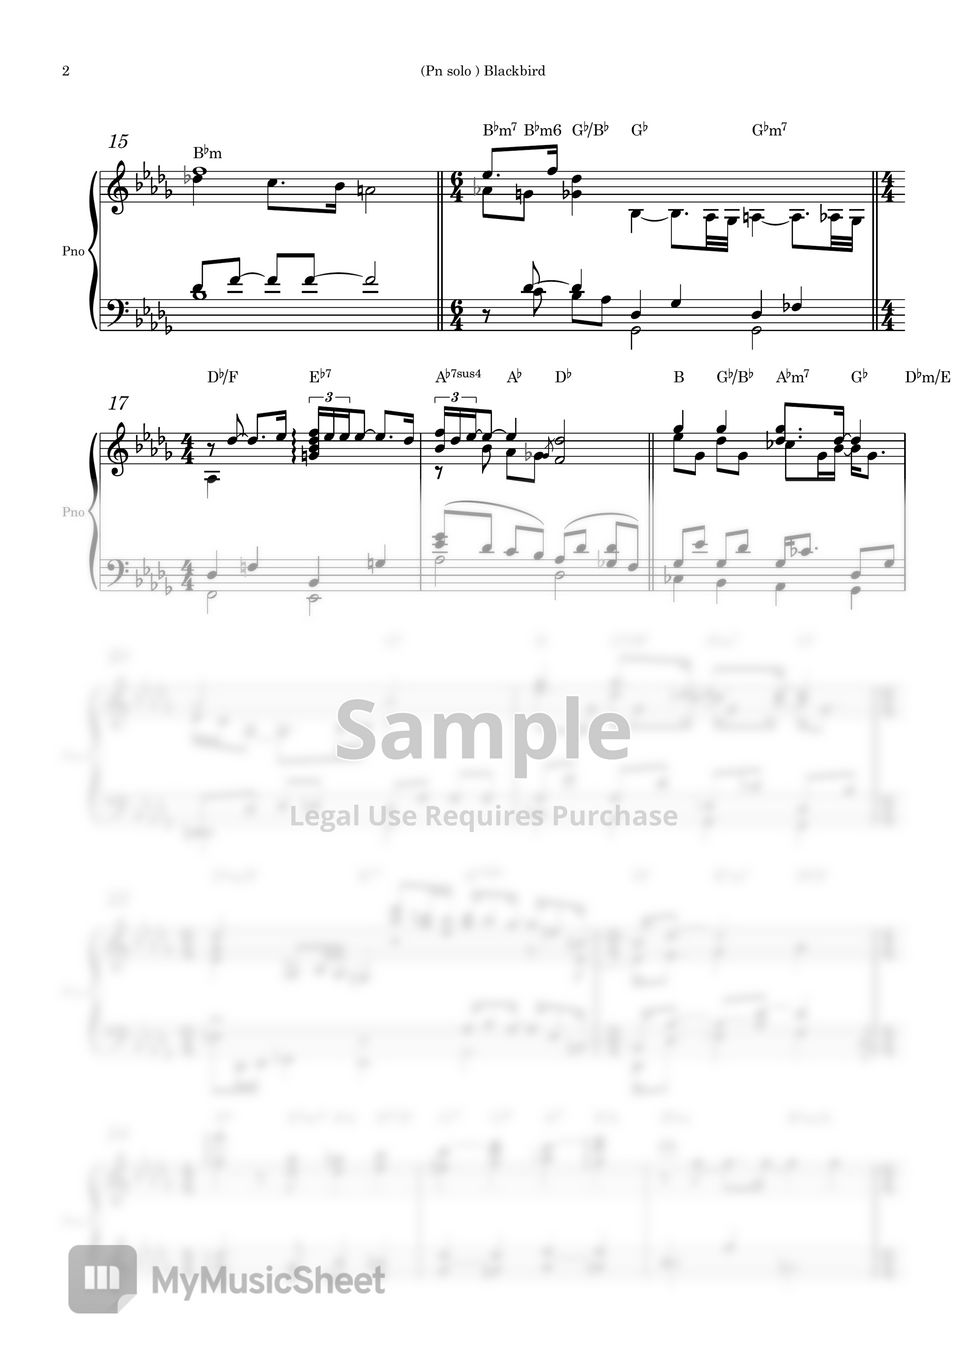 Paul McCarteny - Blackbird (piano solo) by Piano QQQ